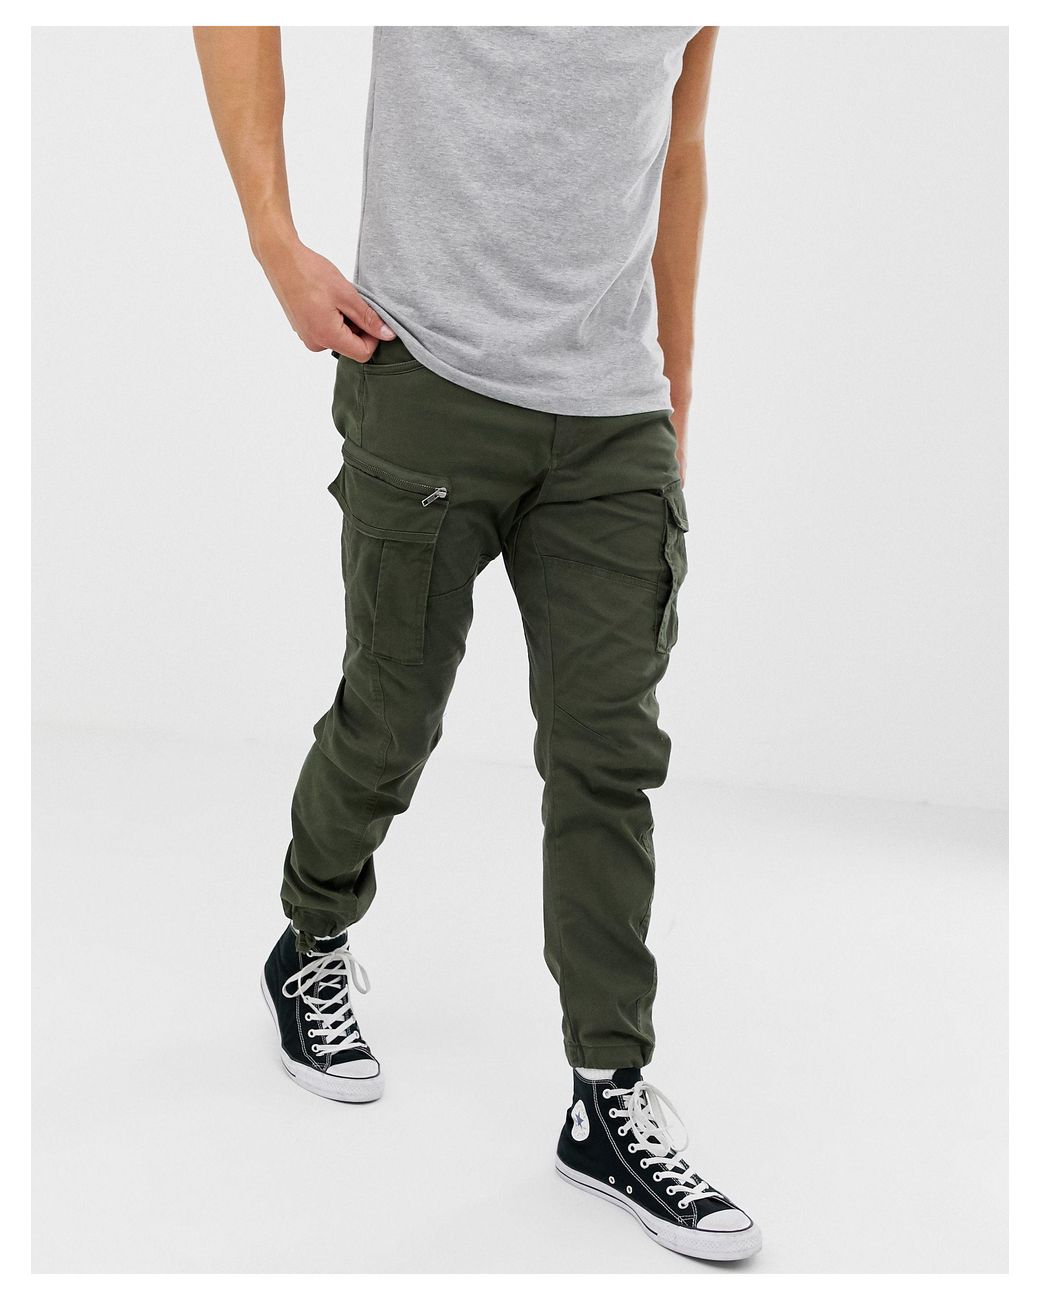 Jack & Jones Men's Slim-Fit Combat Cargo Trousers Tapered Leg Casual Smart  Pants | eBay